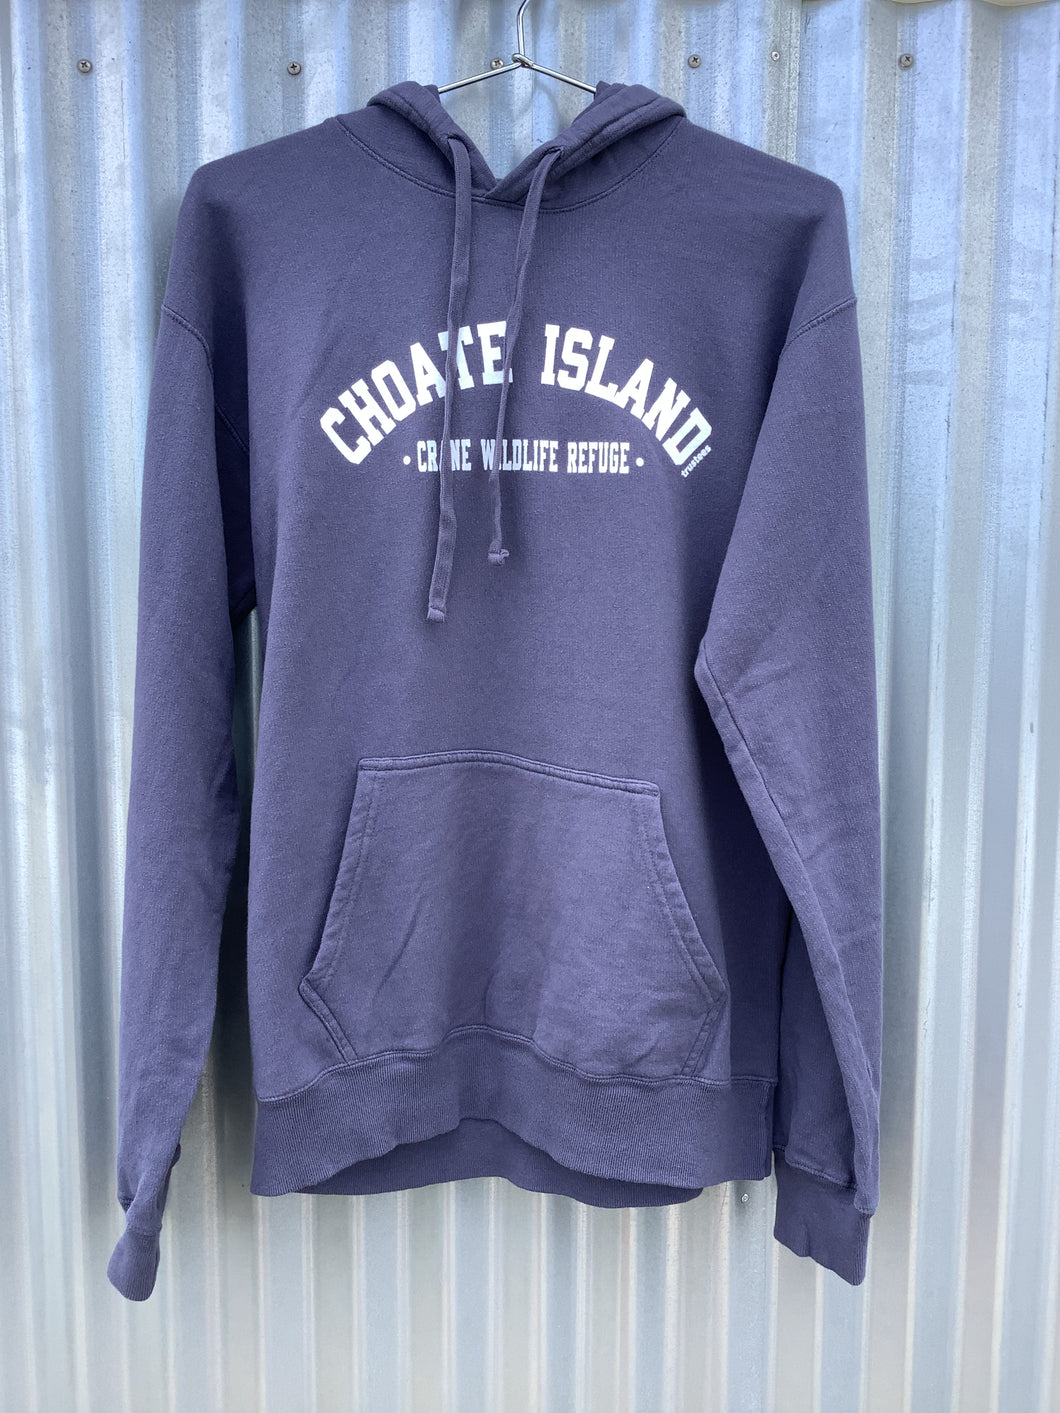 Choate Island Hooded Sweatshirt